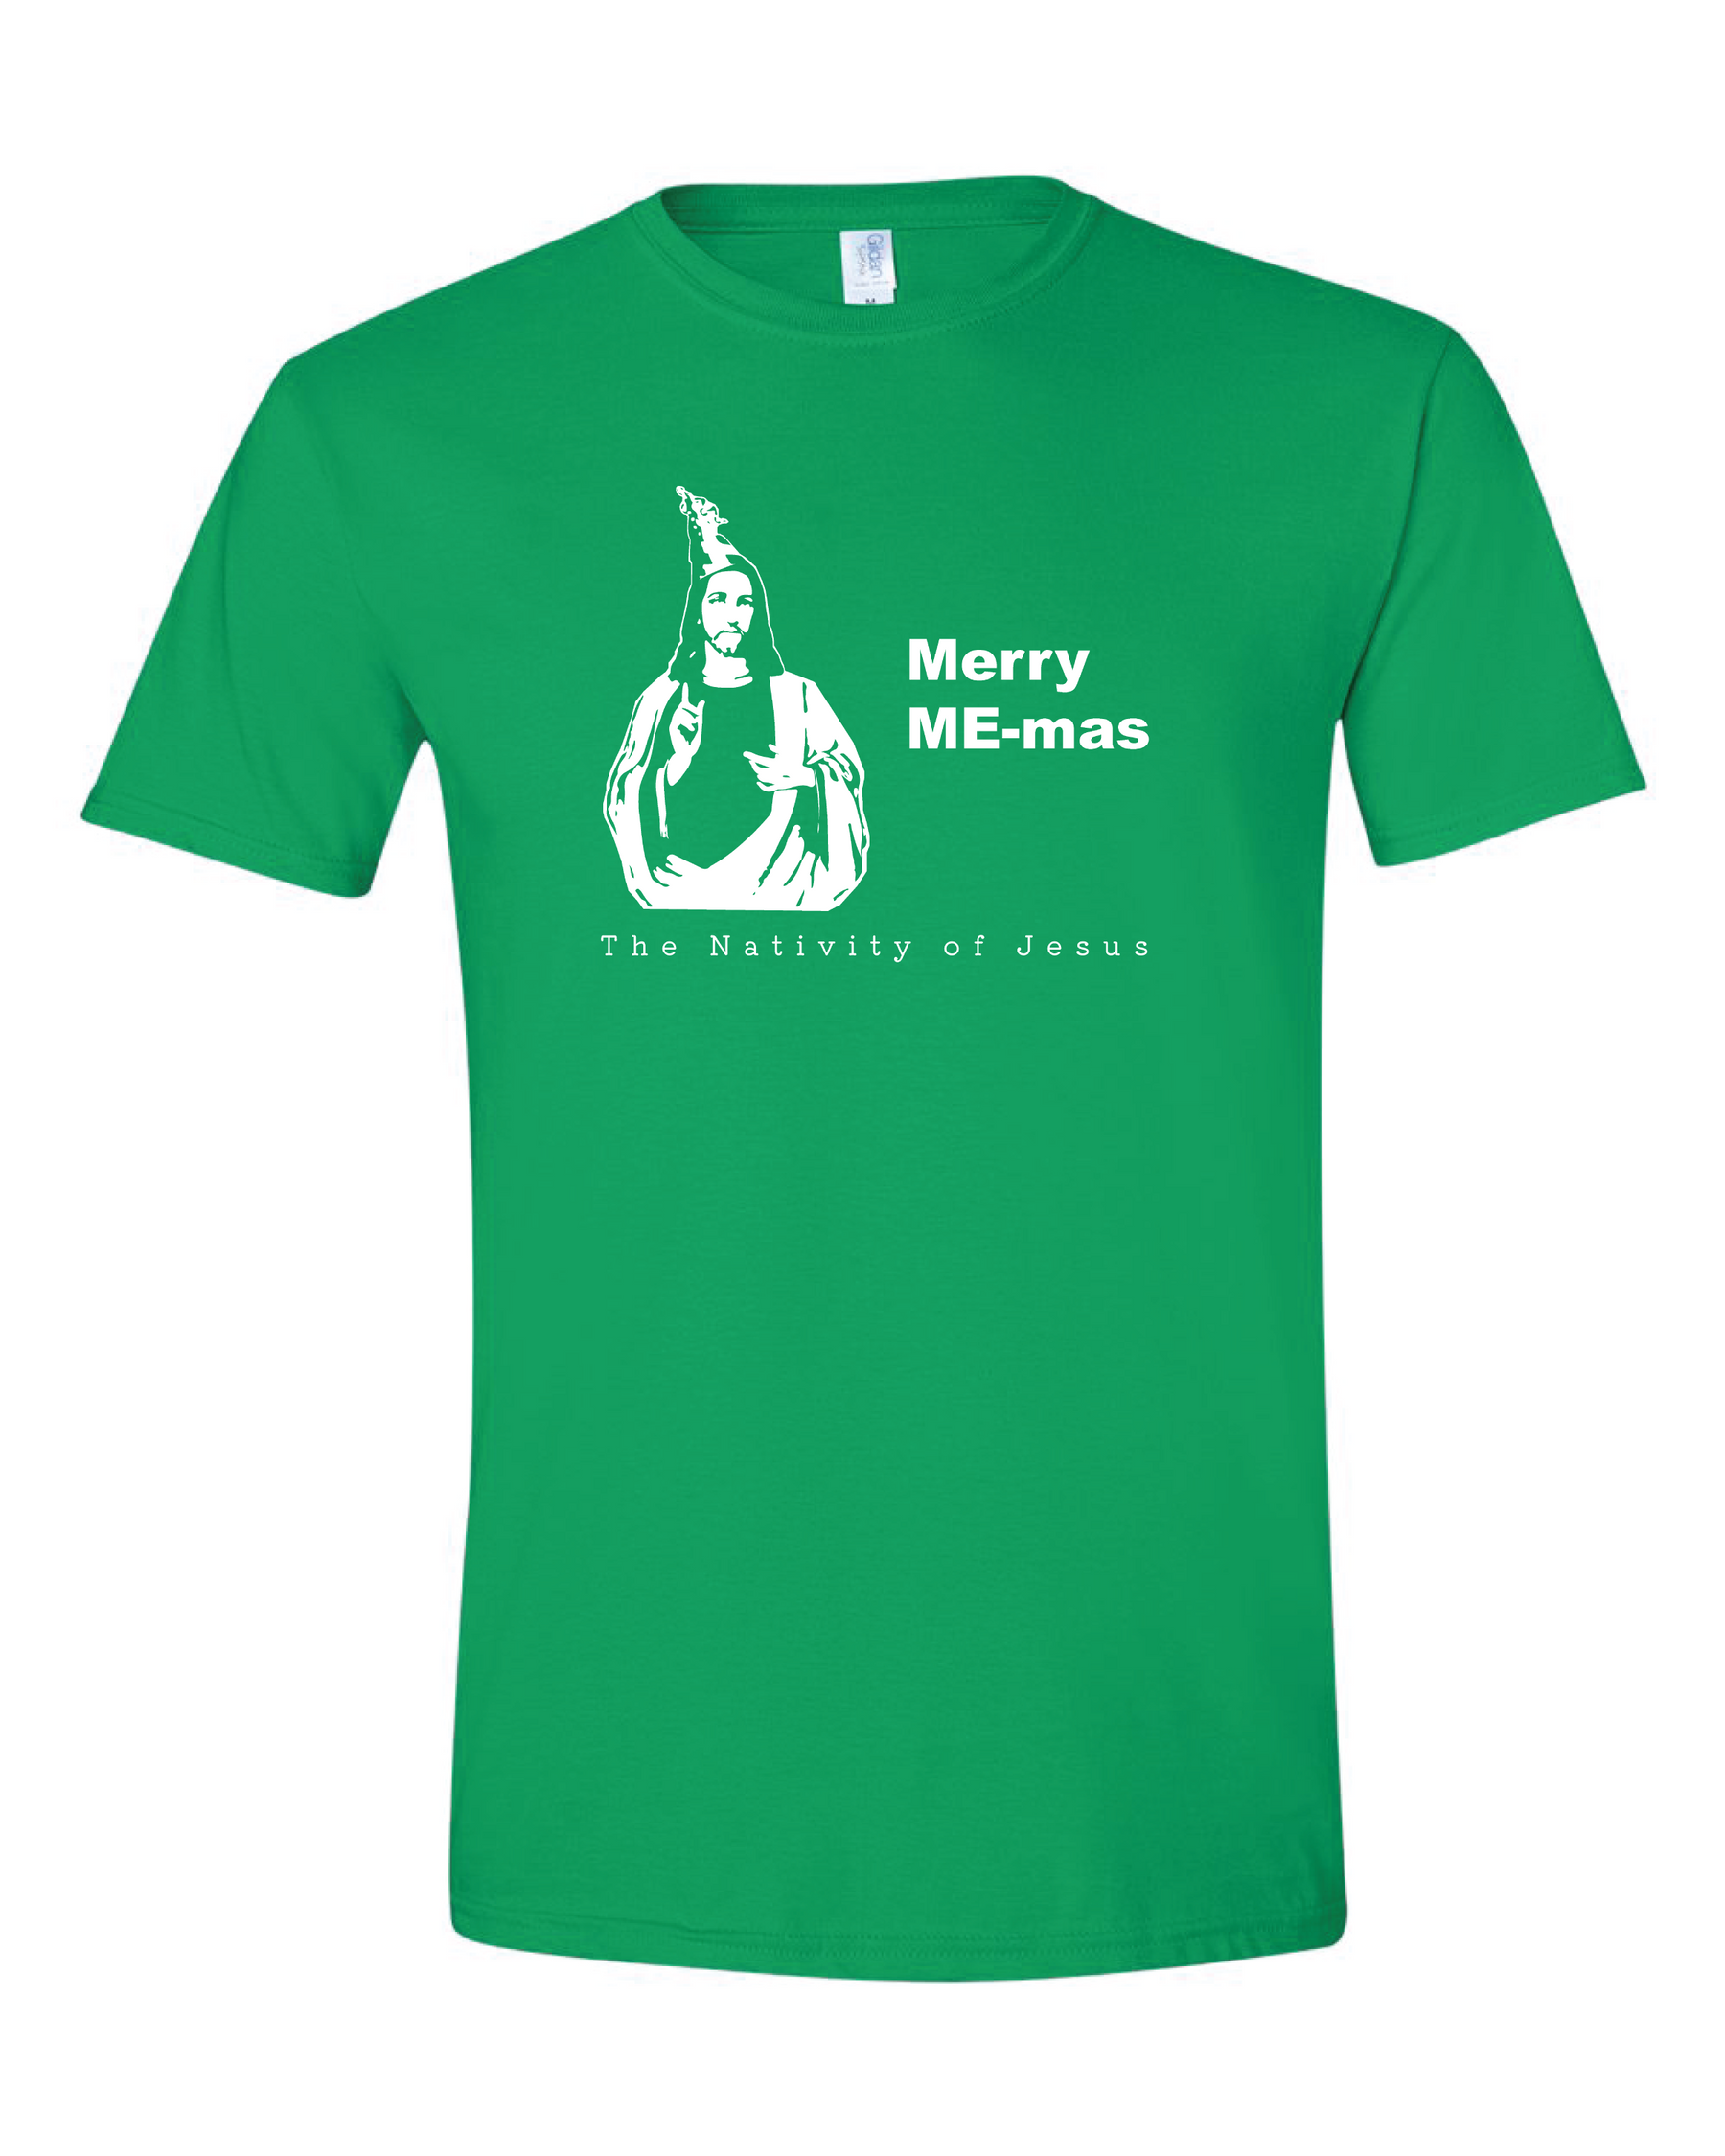 Merry ME-mas - The Nativity of Jesus T-Shirt